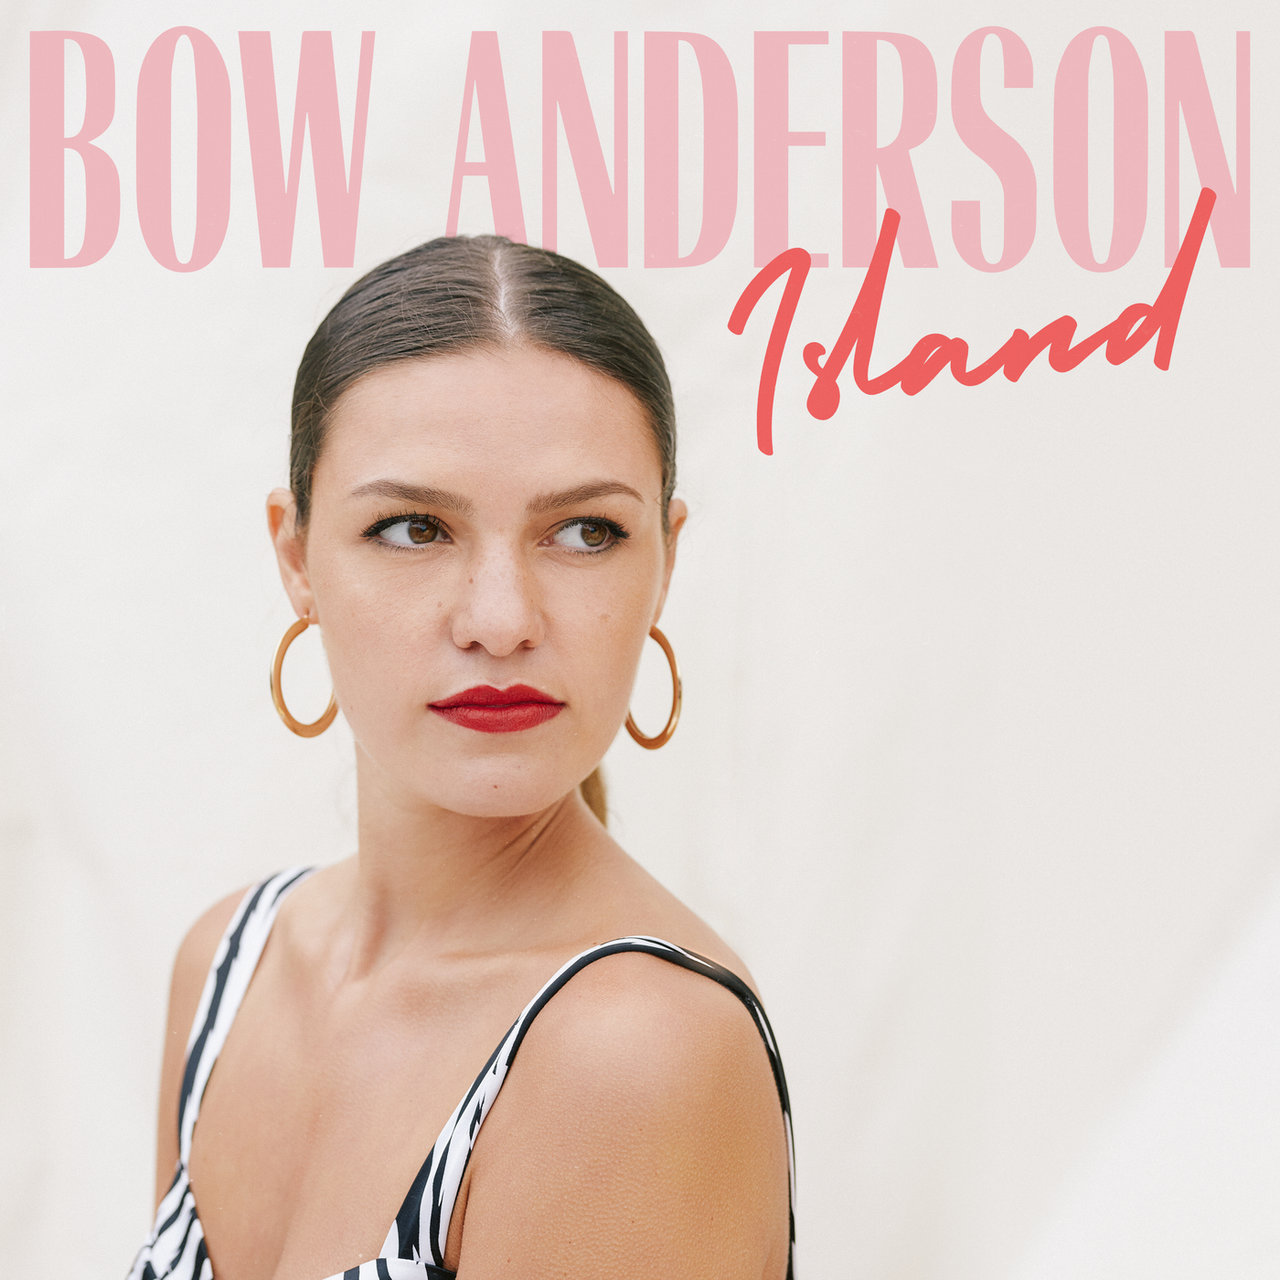 Bow Anderson — Island cover artwork